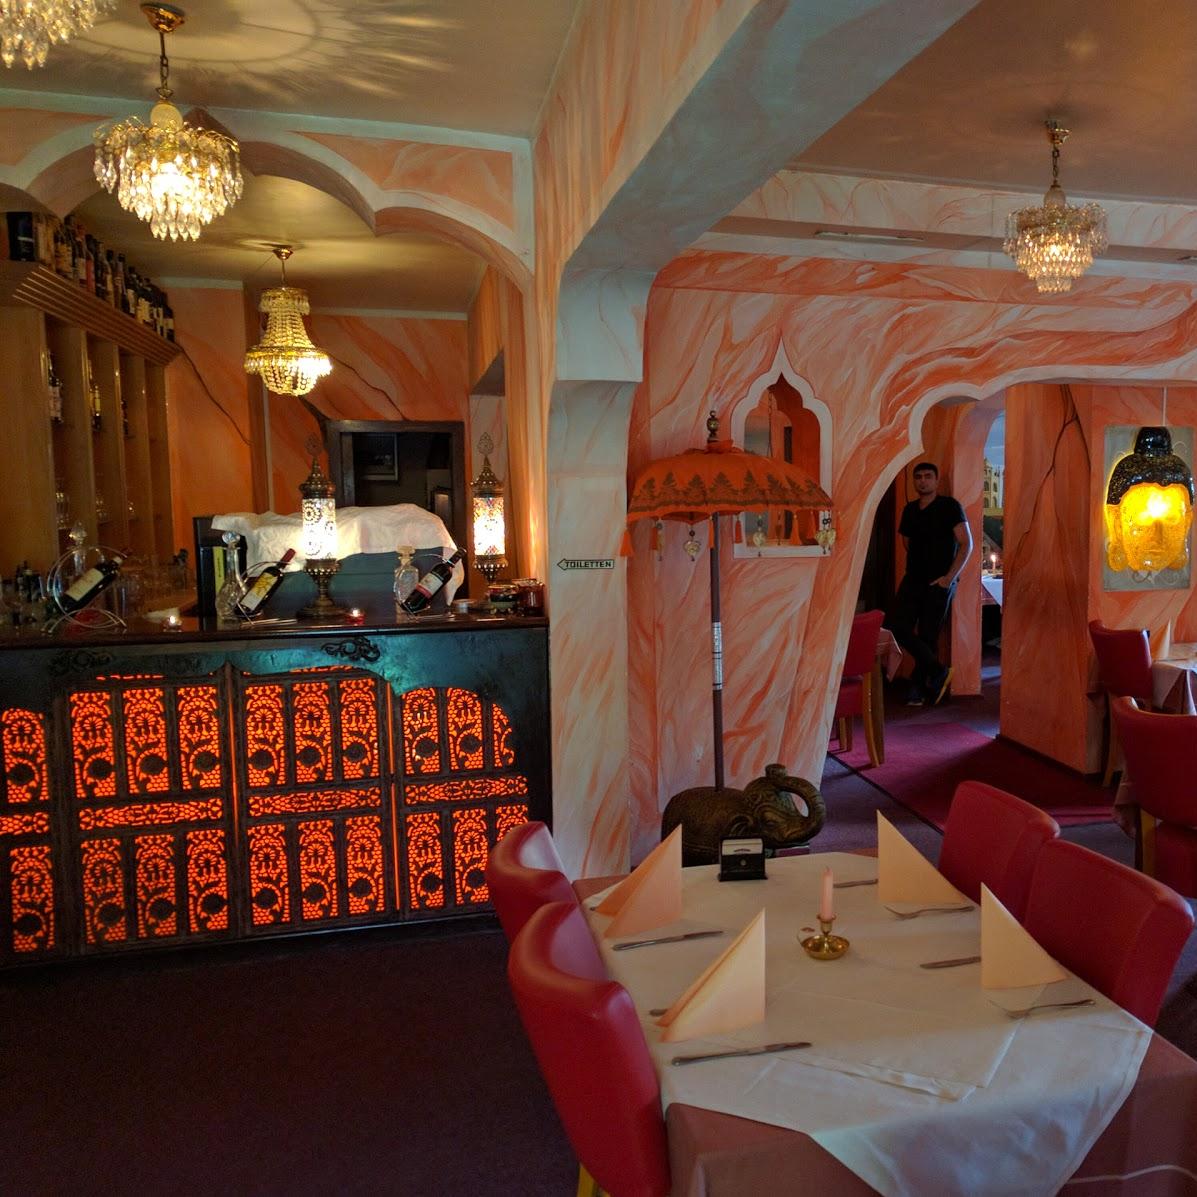 Restaurant "Tandoori Mahal" in Berlin